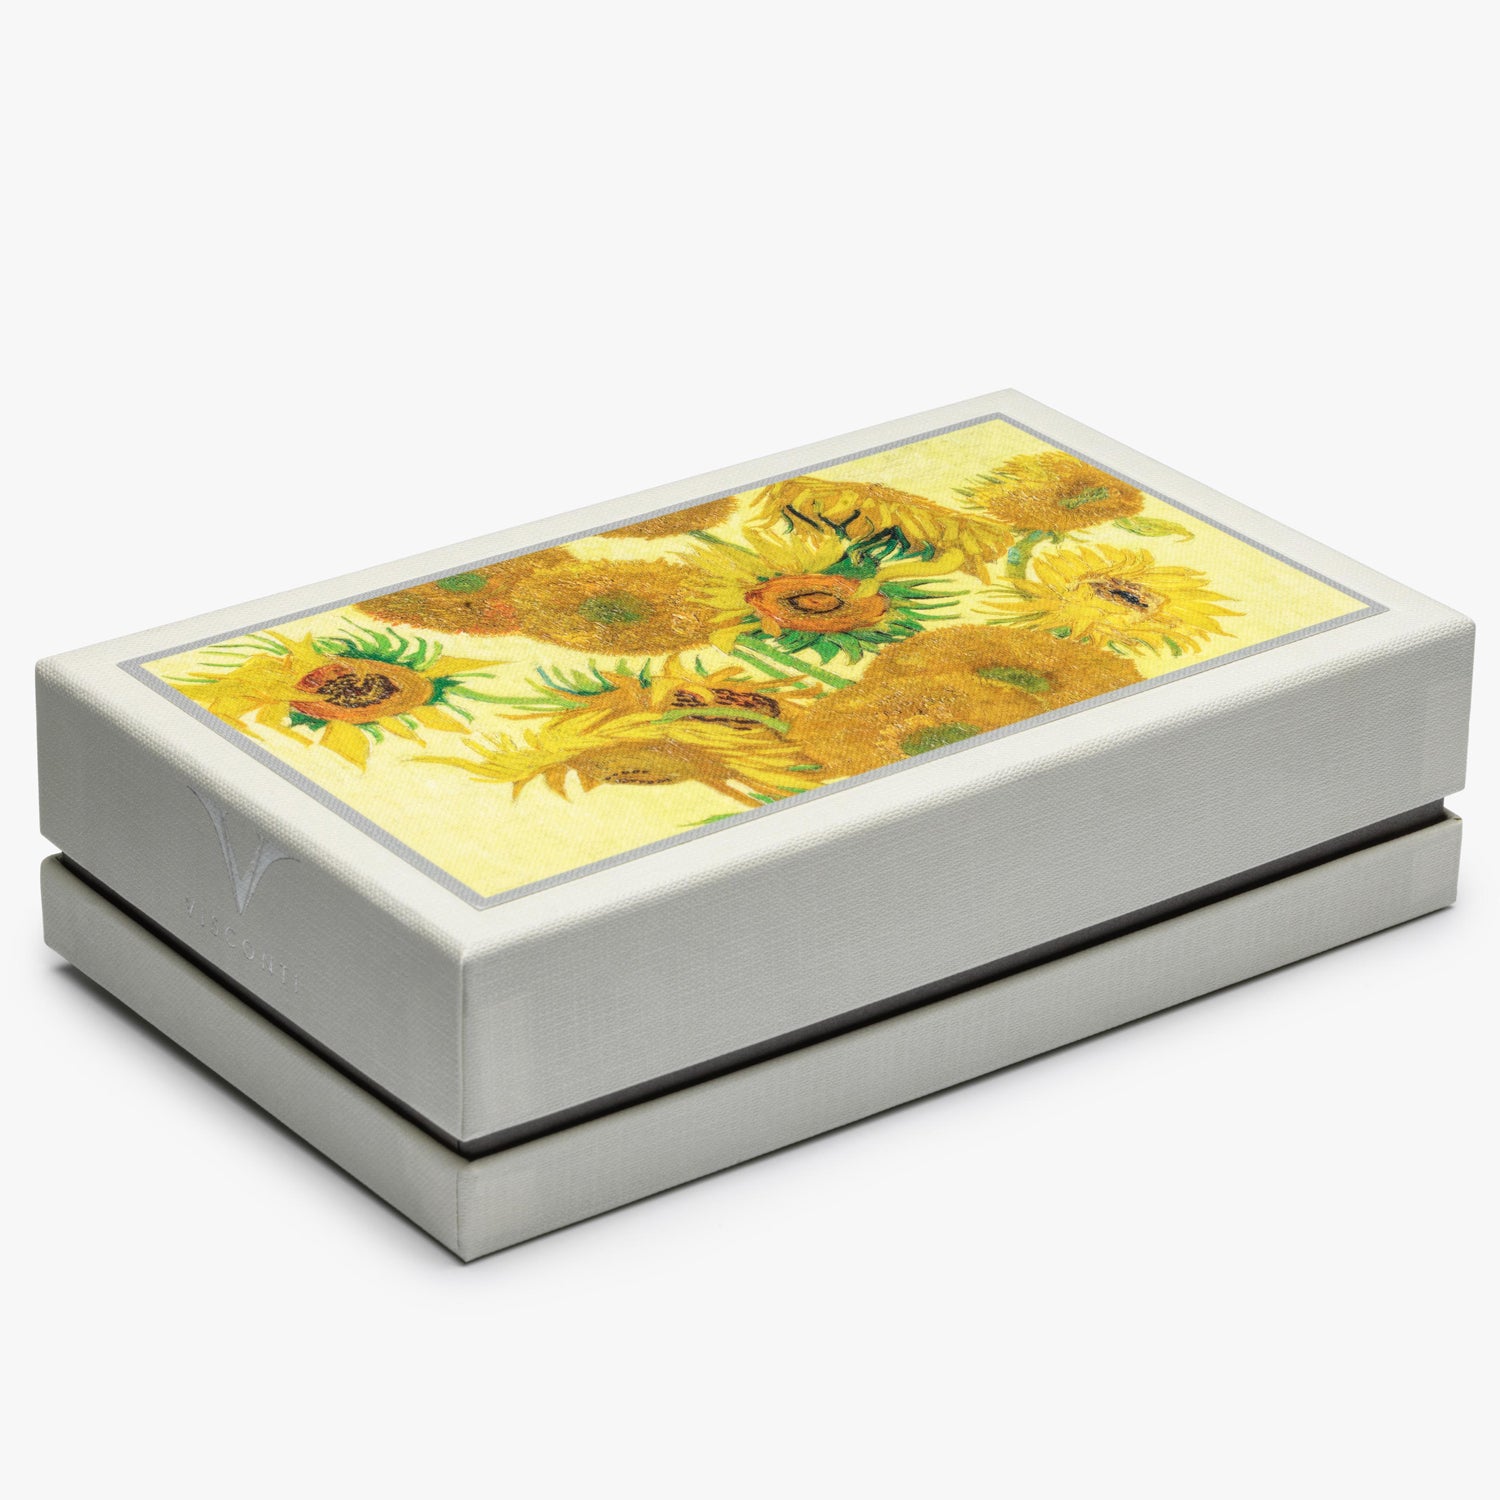 Visconti Van Gogh "Sunflowers" Fountain Pen